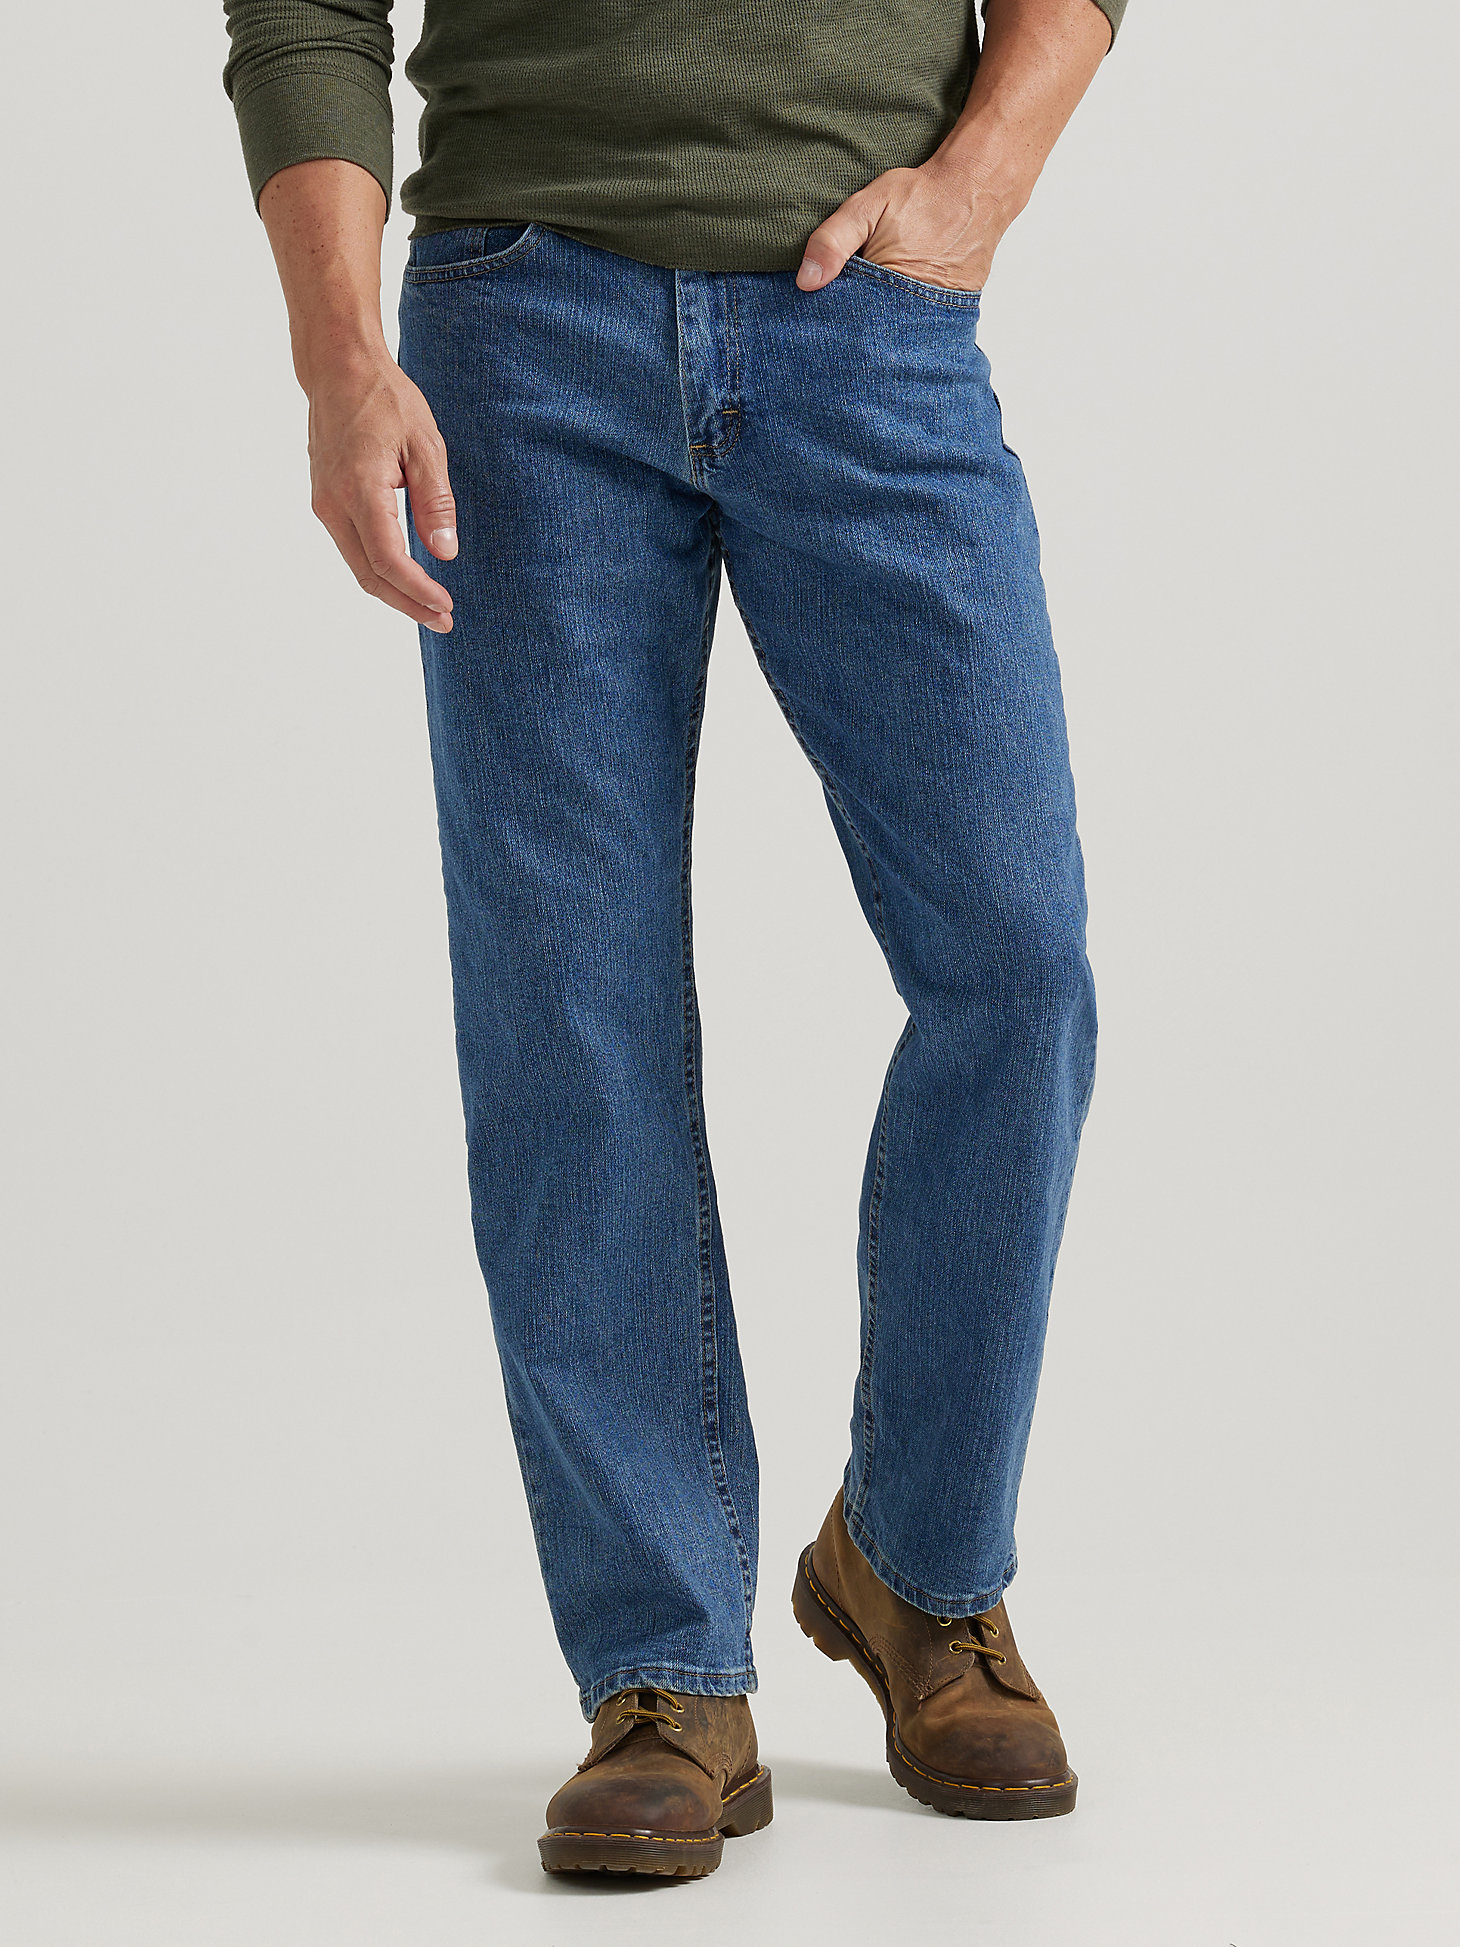 Arriba 50+ imagen wrangler authentics men’s relaxed fit comfort flex waist jean